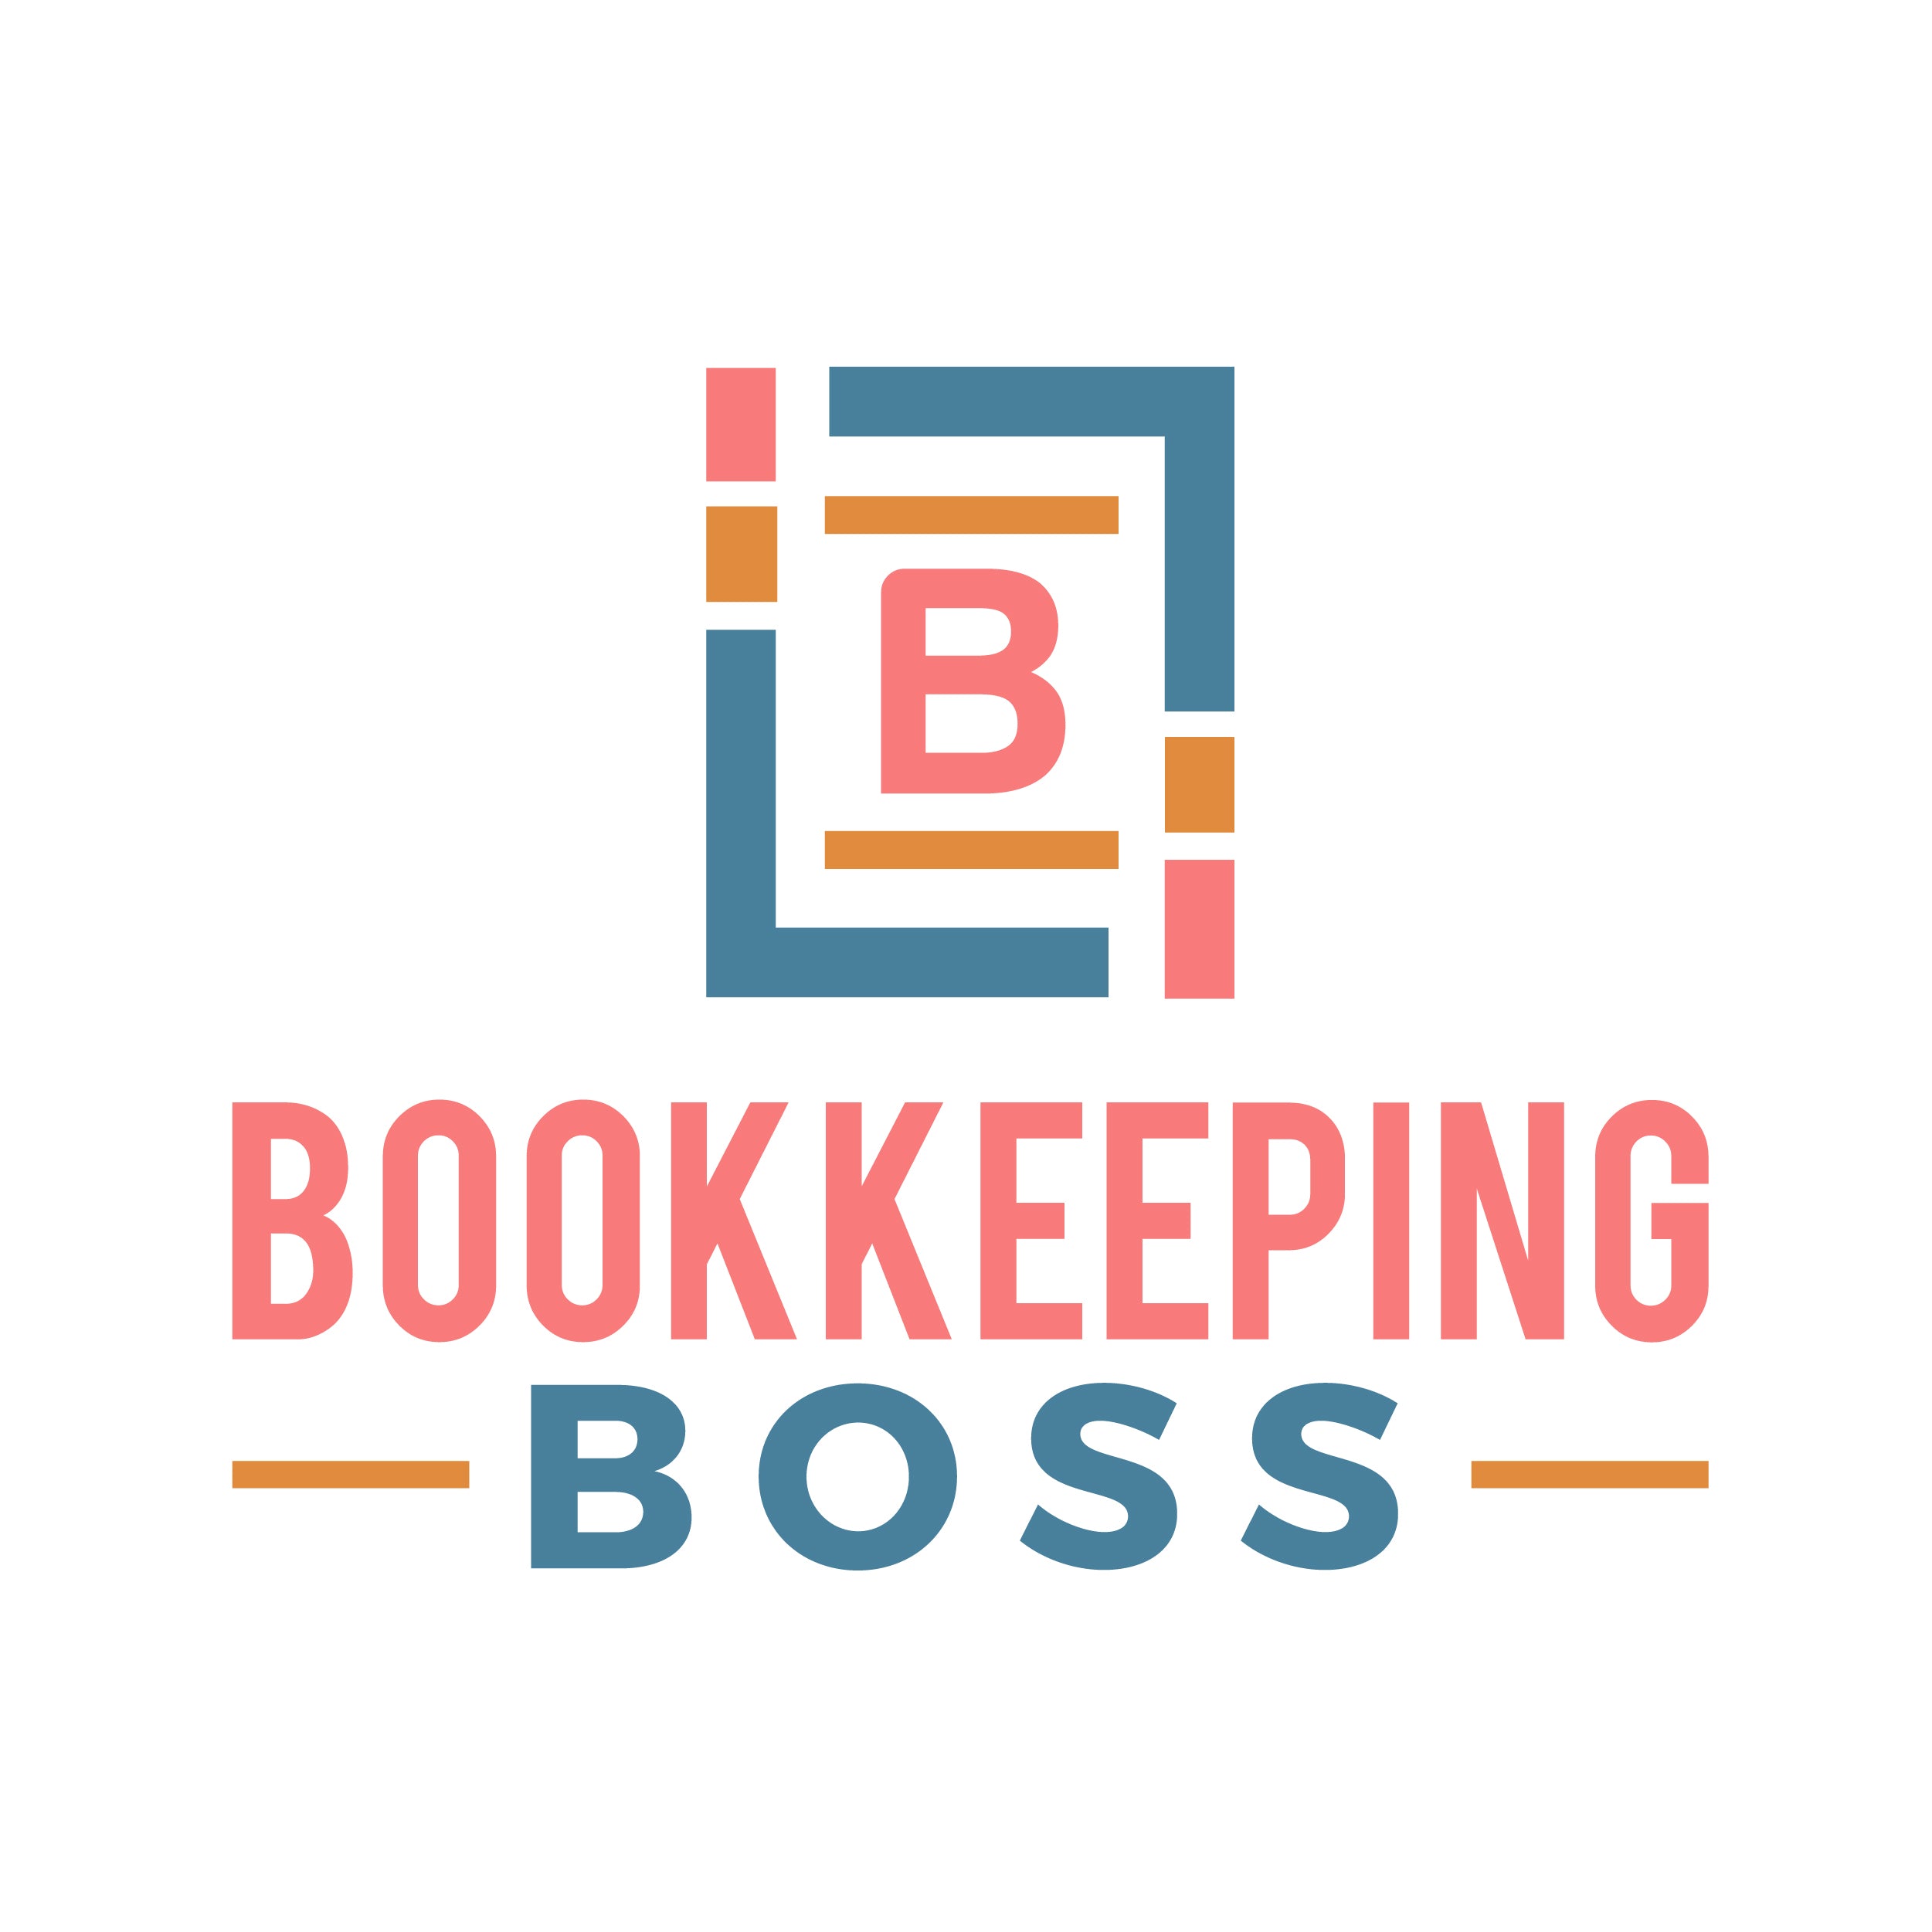 Bookkeeping Boss